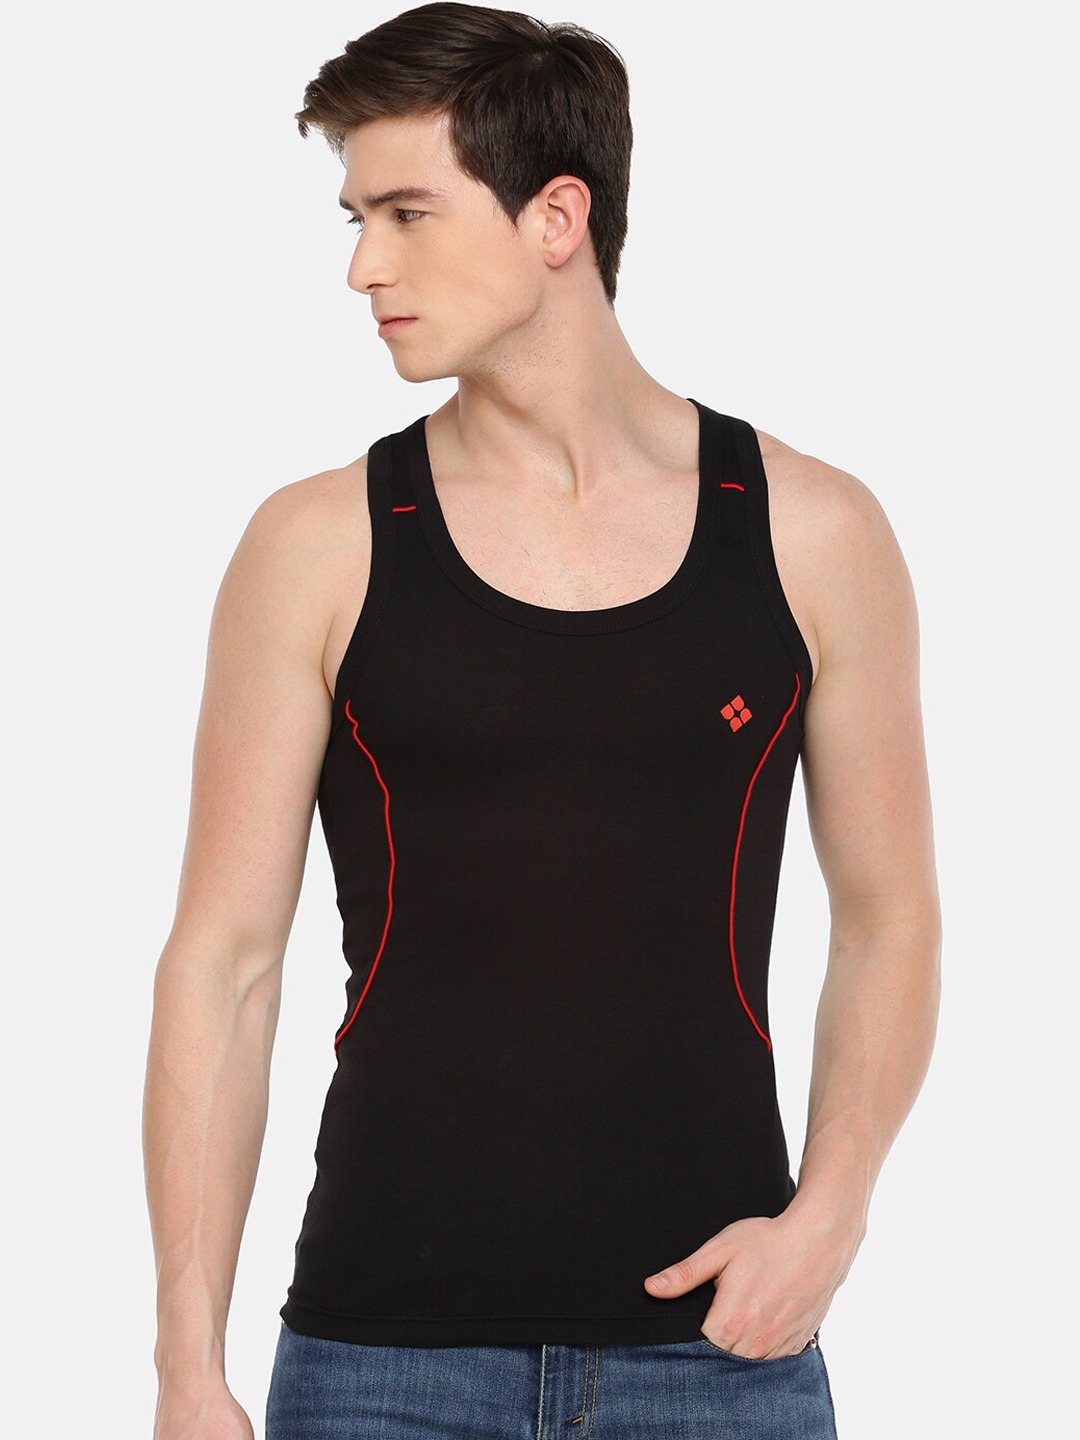 Clothing Innerwear Vests | Dollar Bigboss Men Pack Of 3 Assorted Cotton Gym Vests - XI84679